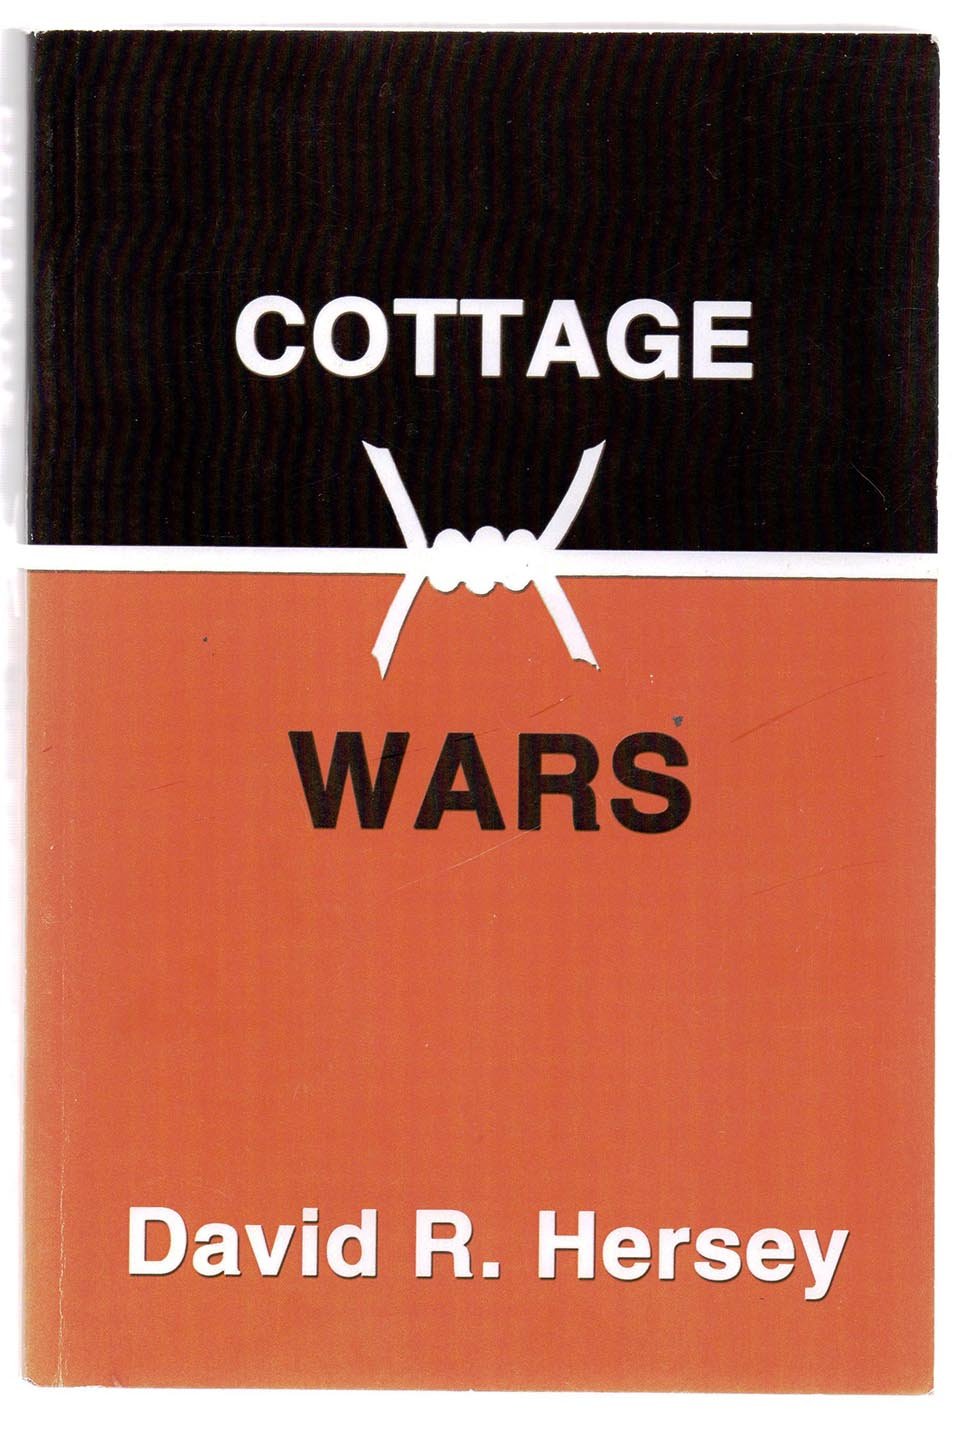 Cottage Wars